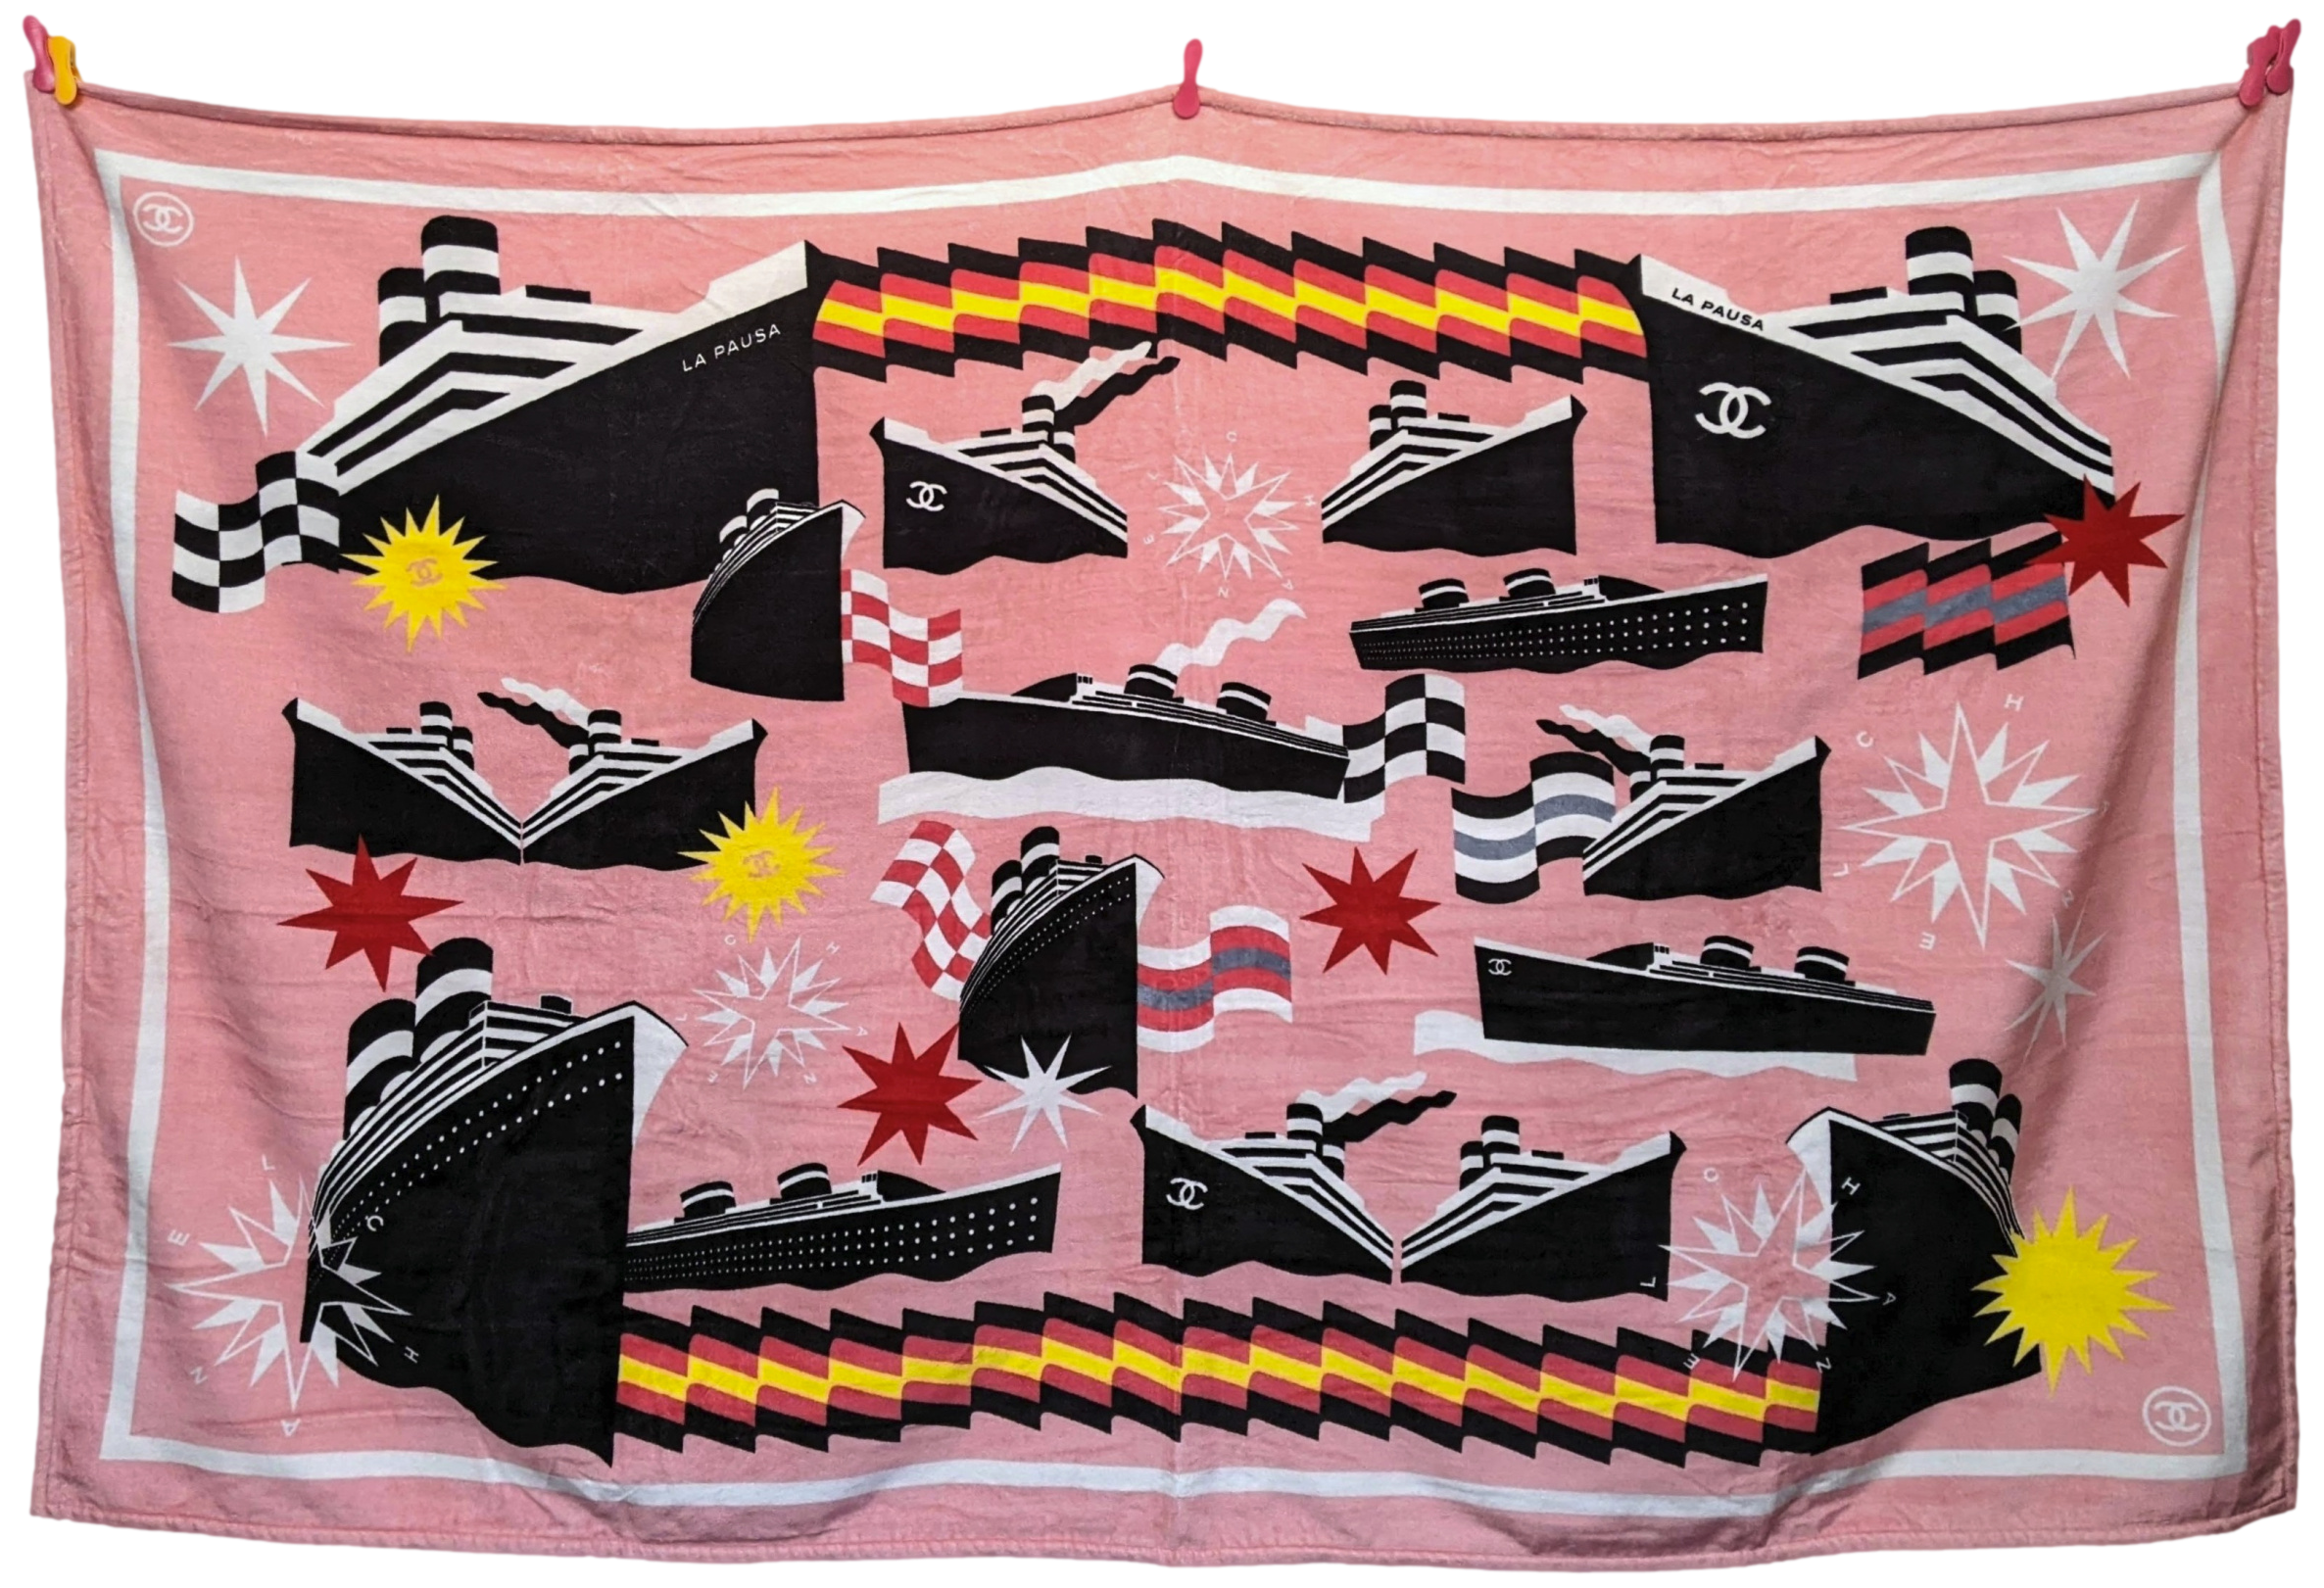 Chanel Pink La Pausa Terry Cotton Beach Towel XXL 125 x 180 cm, Rare!